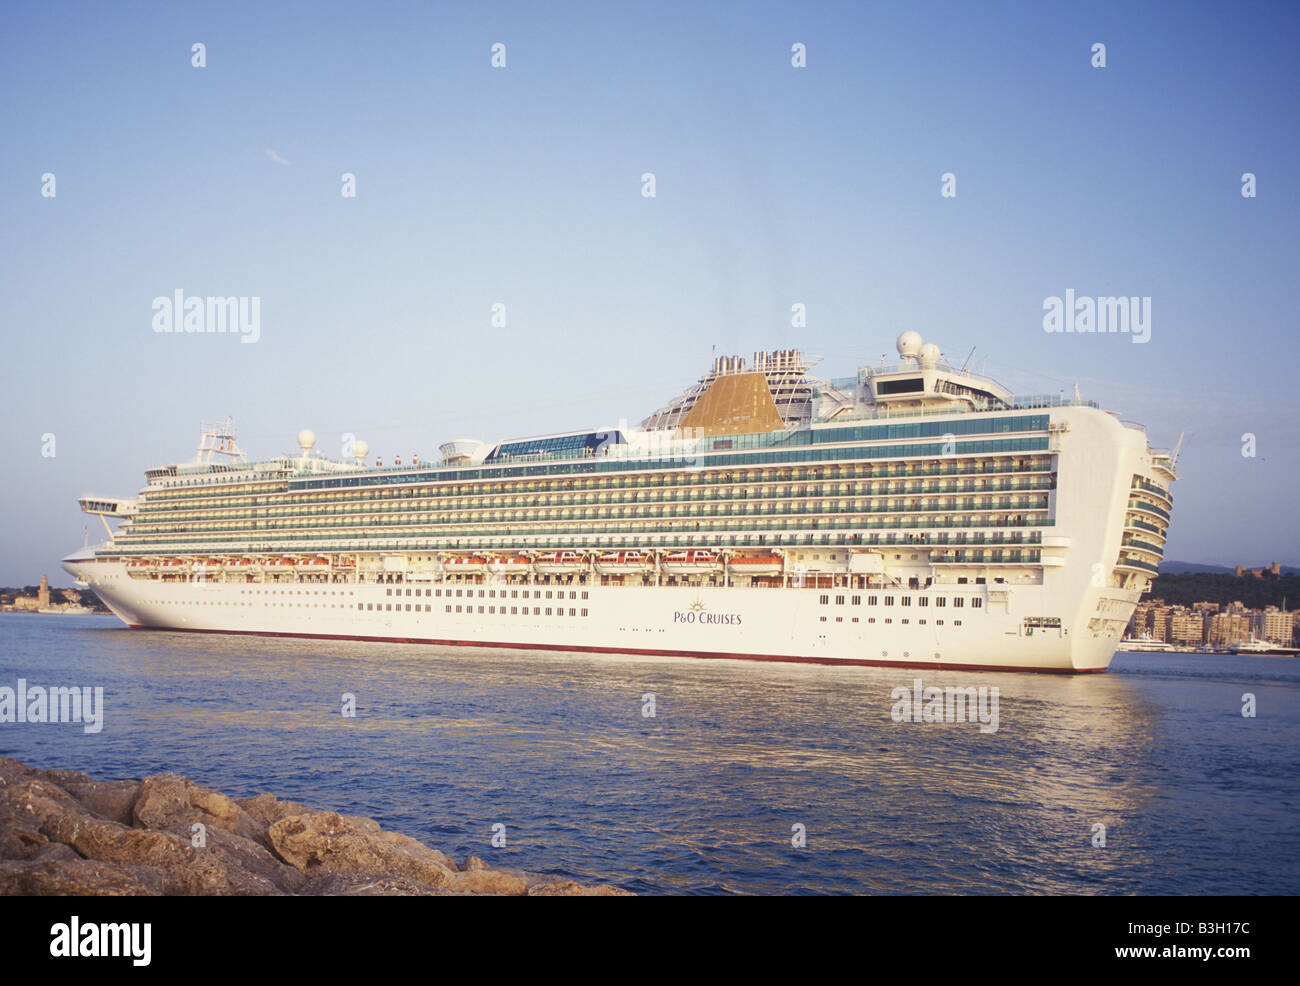 P&O ( P and O ) Cruise lines flagship Ventura during  entry into the Port of Palma de Mallorca , Balearic Islands, Spain. Stock Photo